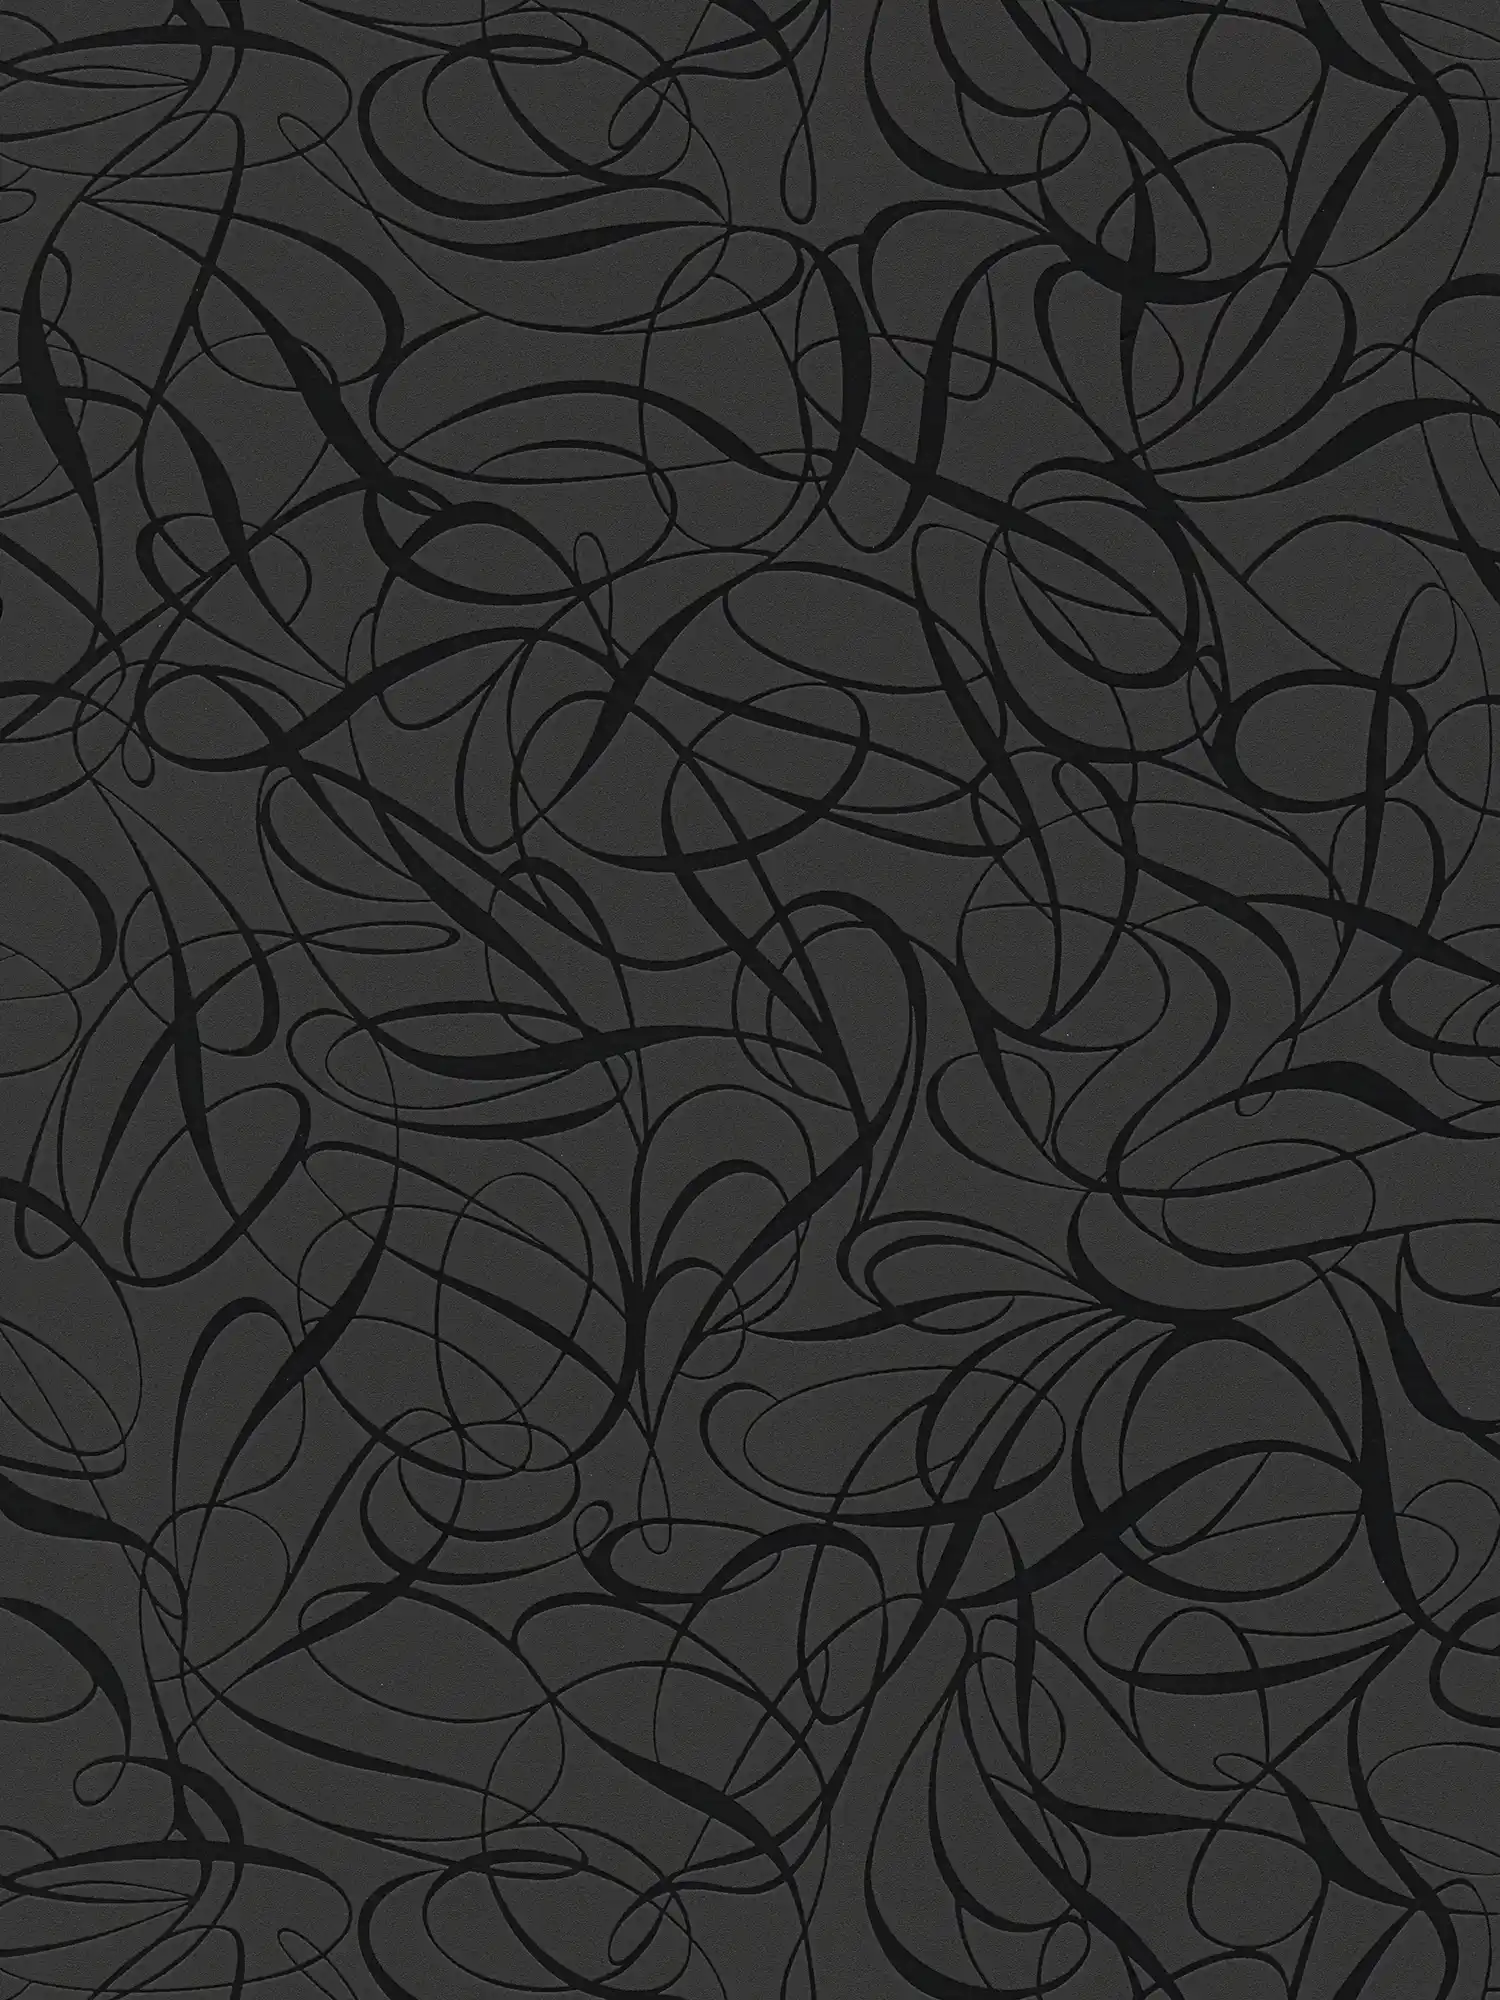 Vliesbehang lijnenspel en glanseffect - zwart, metallic
